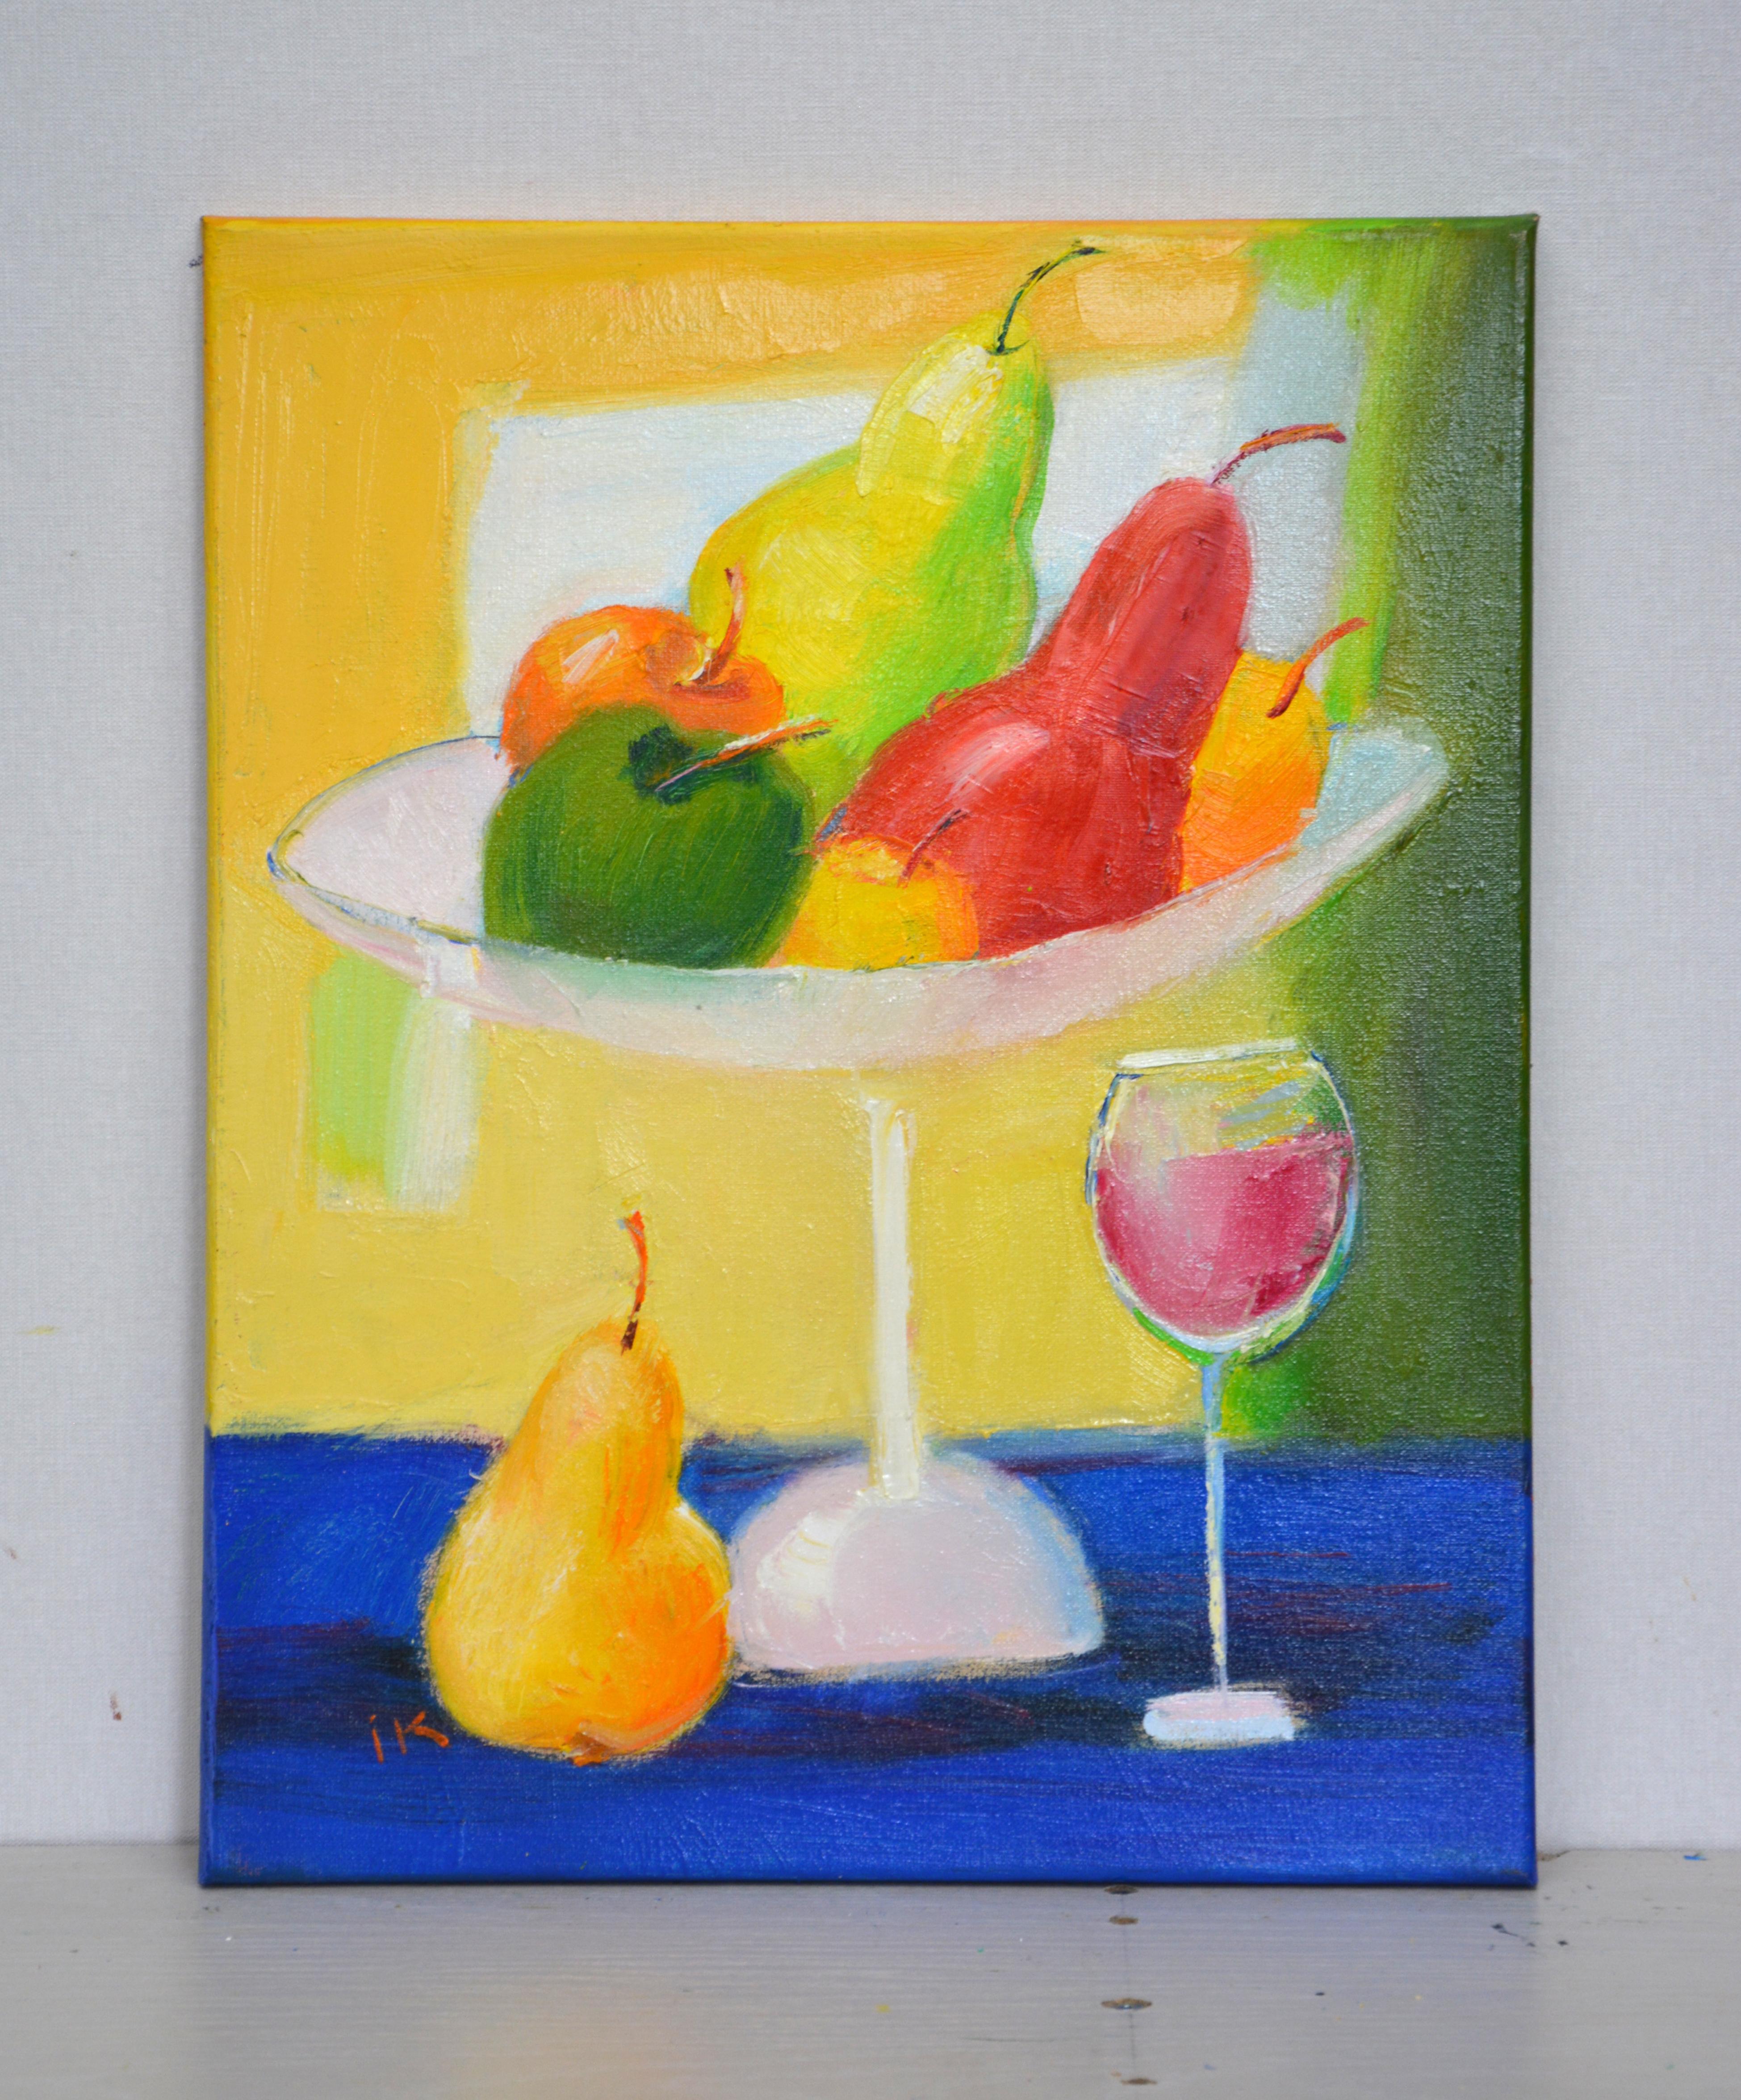 	A glass of light wine - Painting by Iryna Kastsova